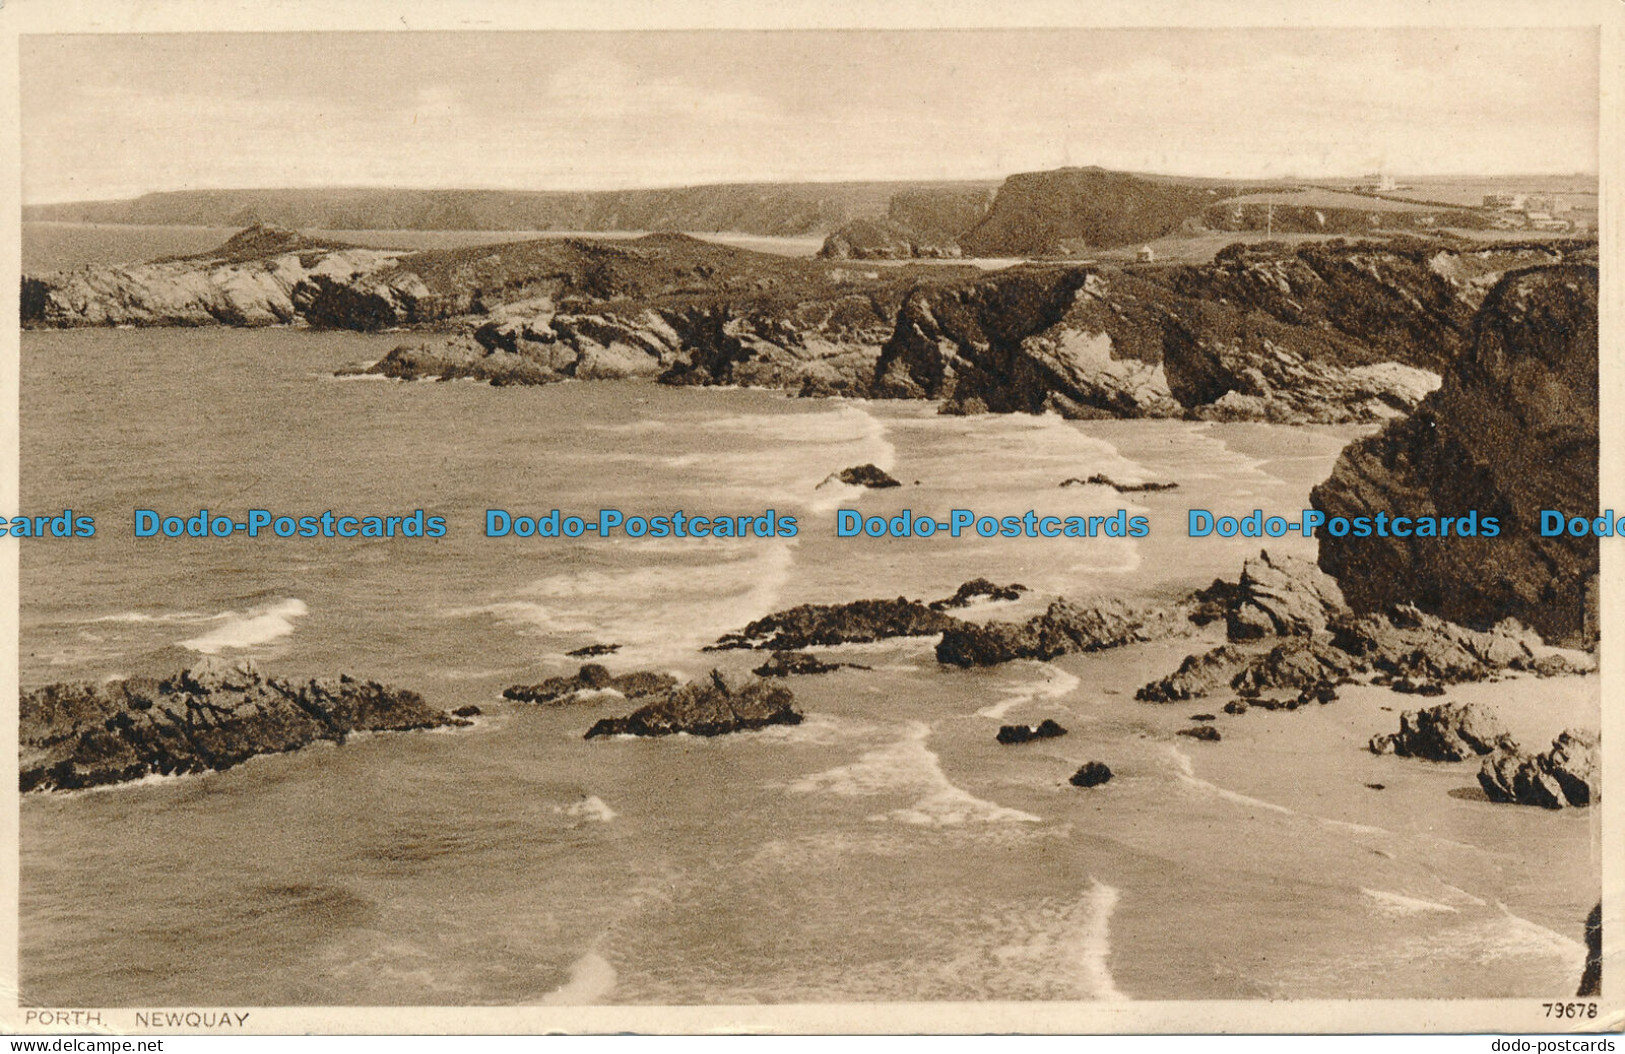 R066772 Porth. Newquay. Photochrom. No 79678. 1937 - World